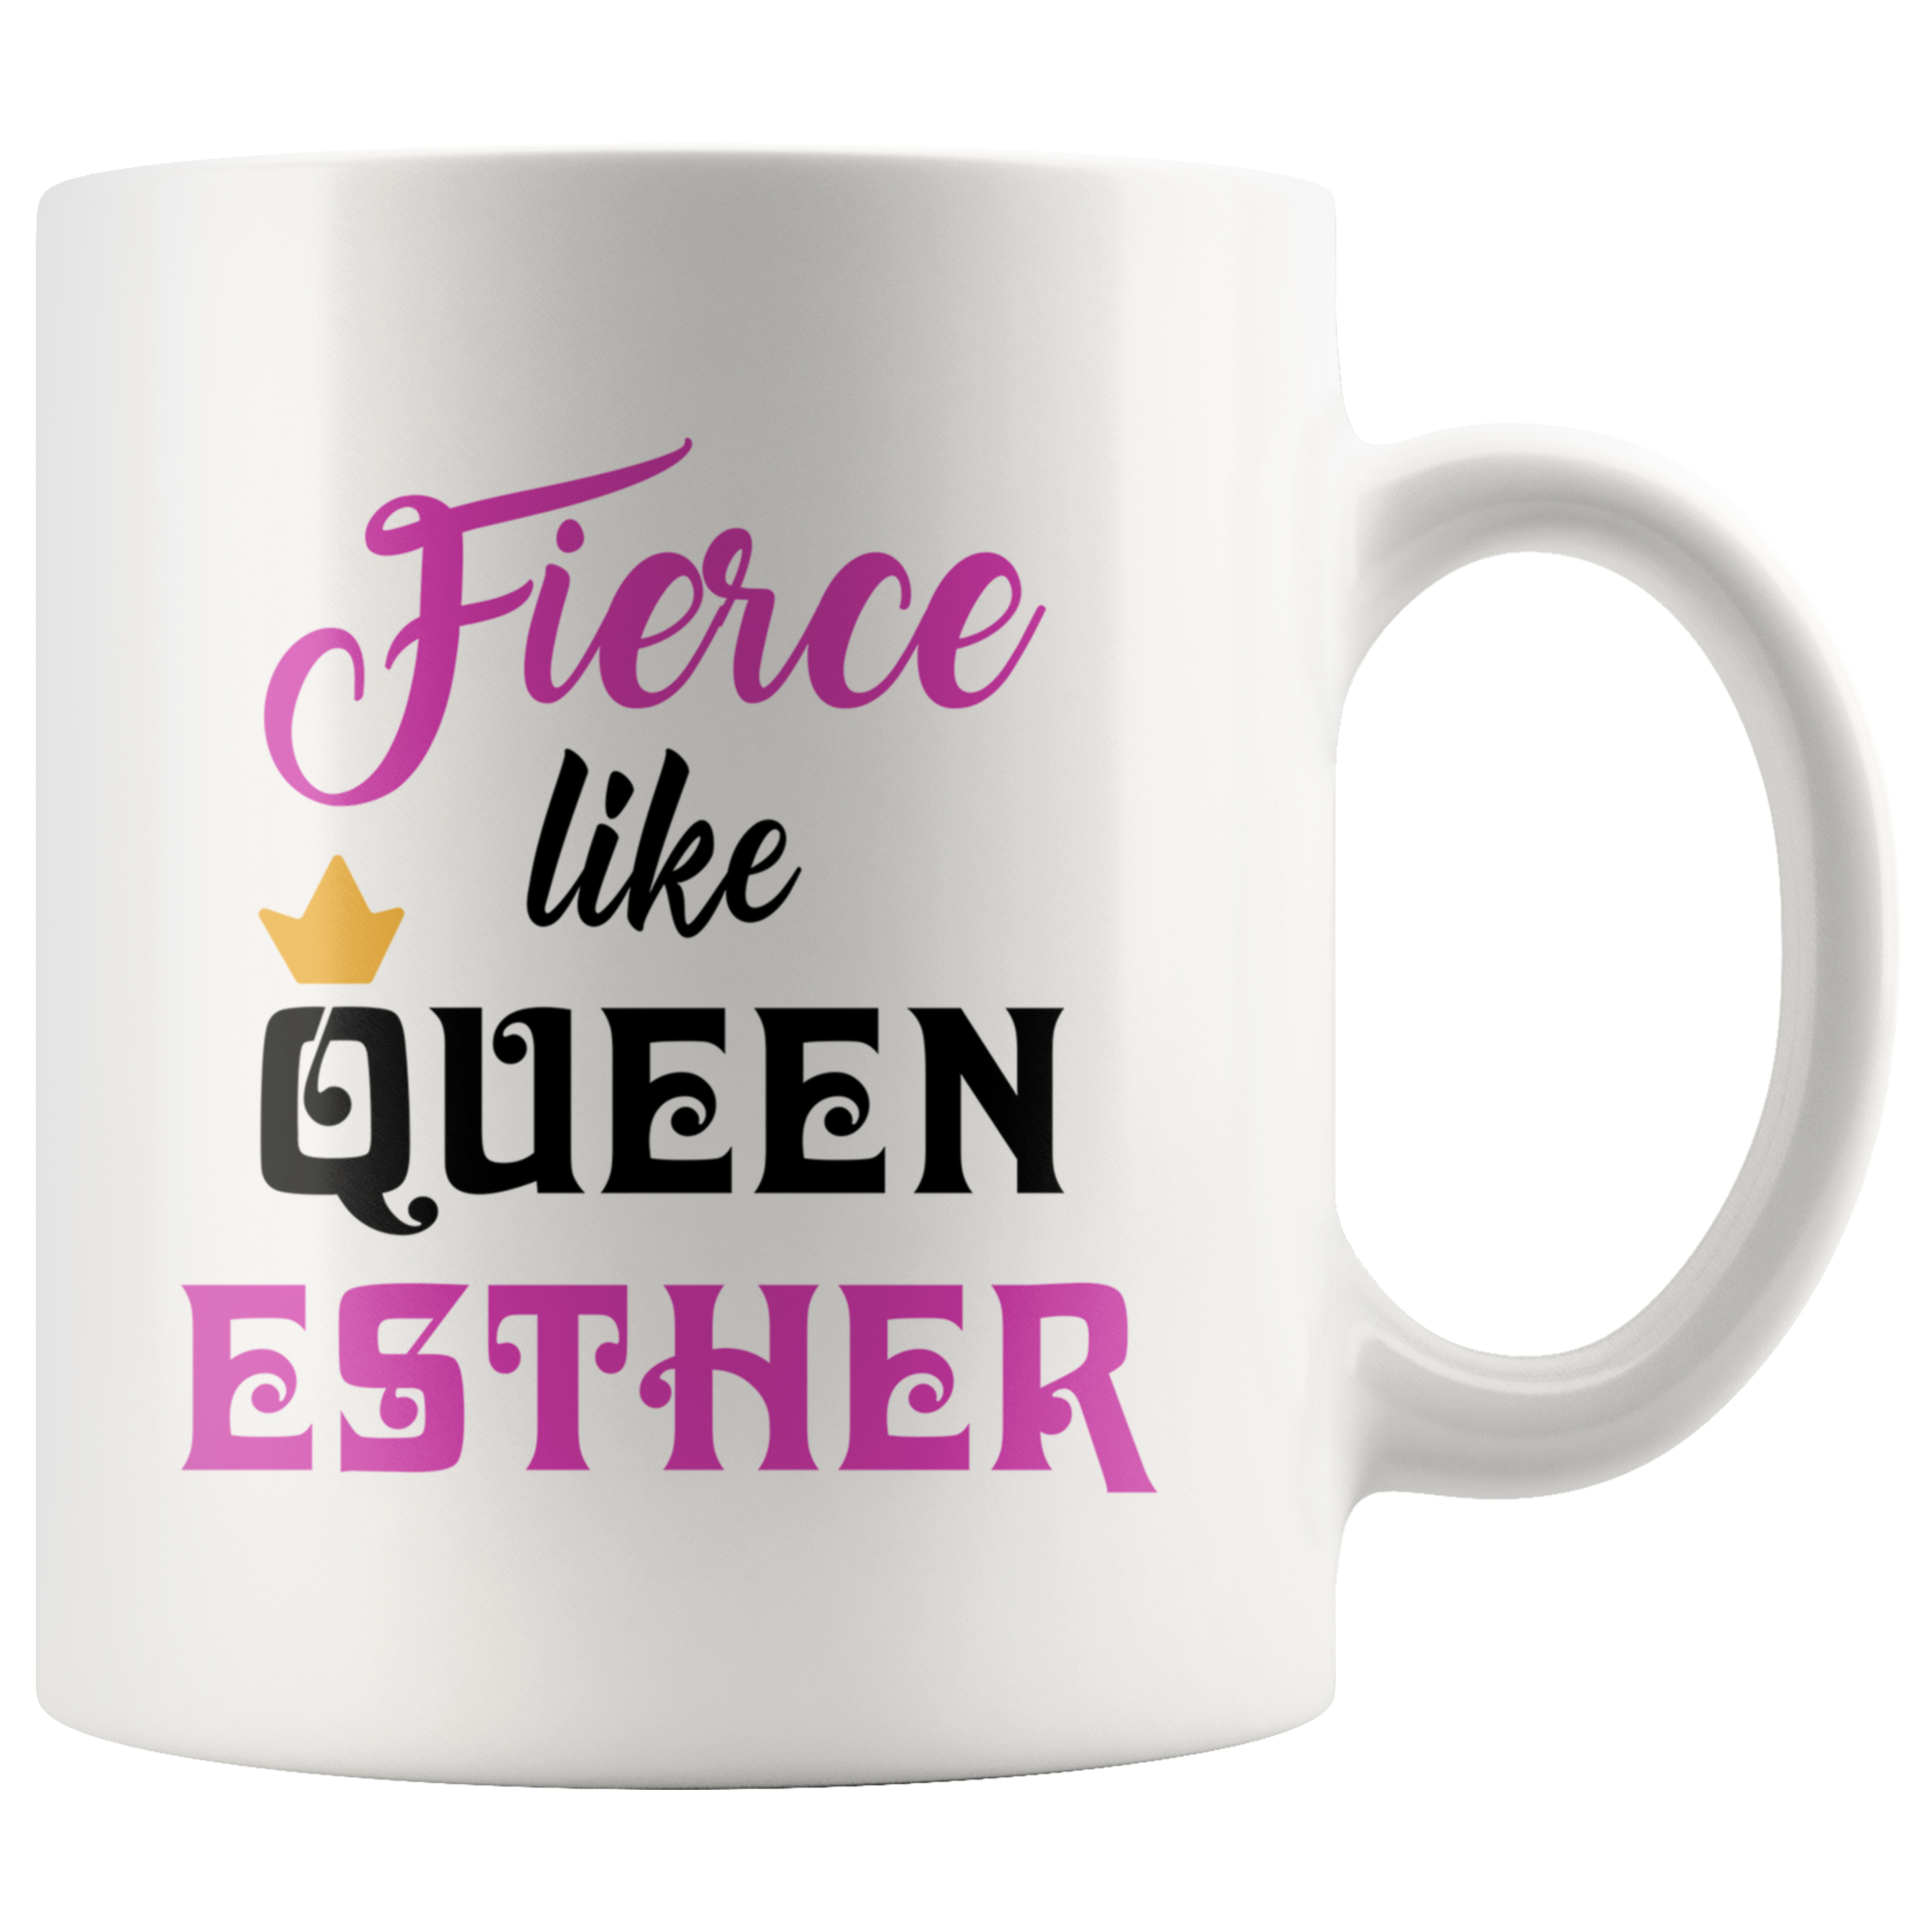 queen esther purim gift mug